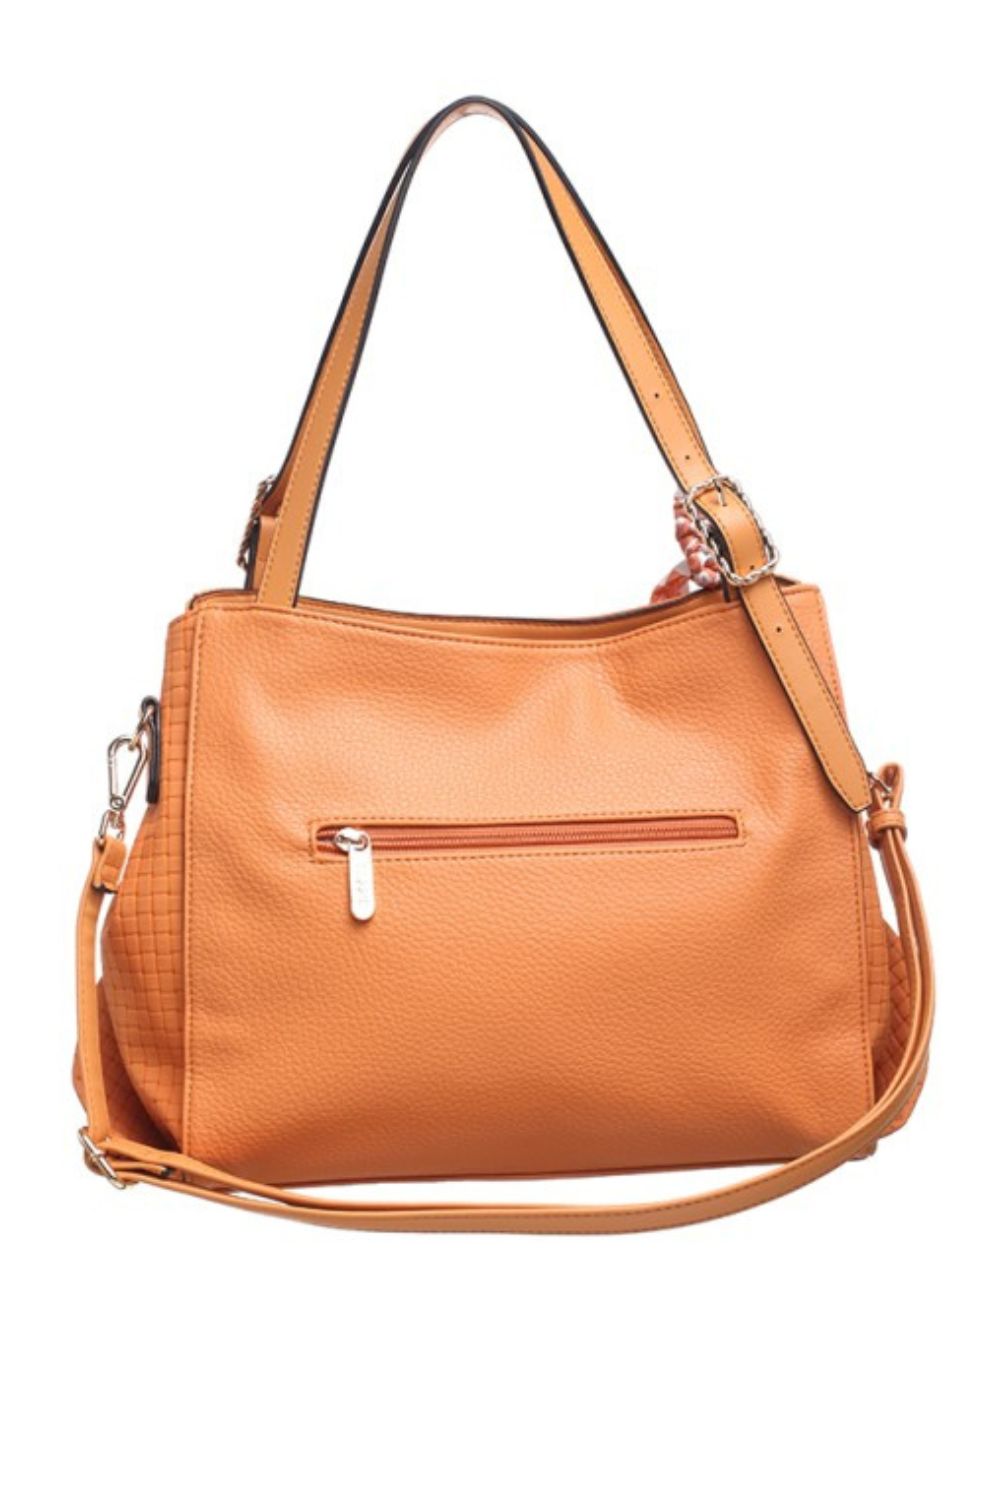 Bessie Handbags Soft Orange Tote Bag with tie accent